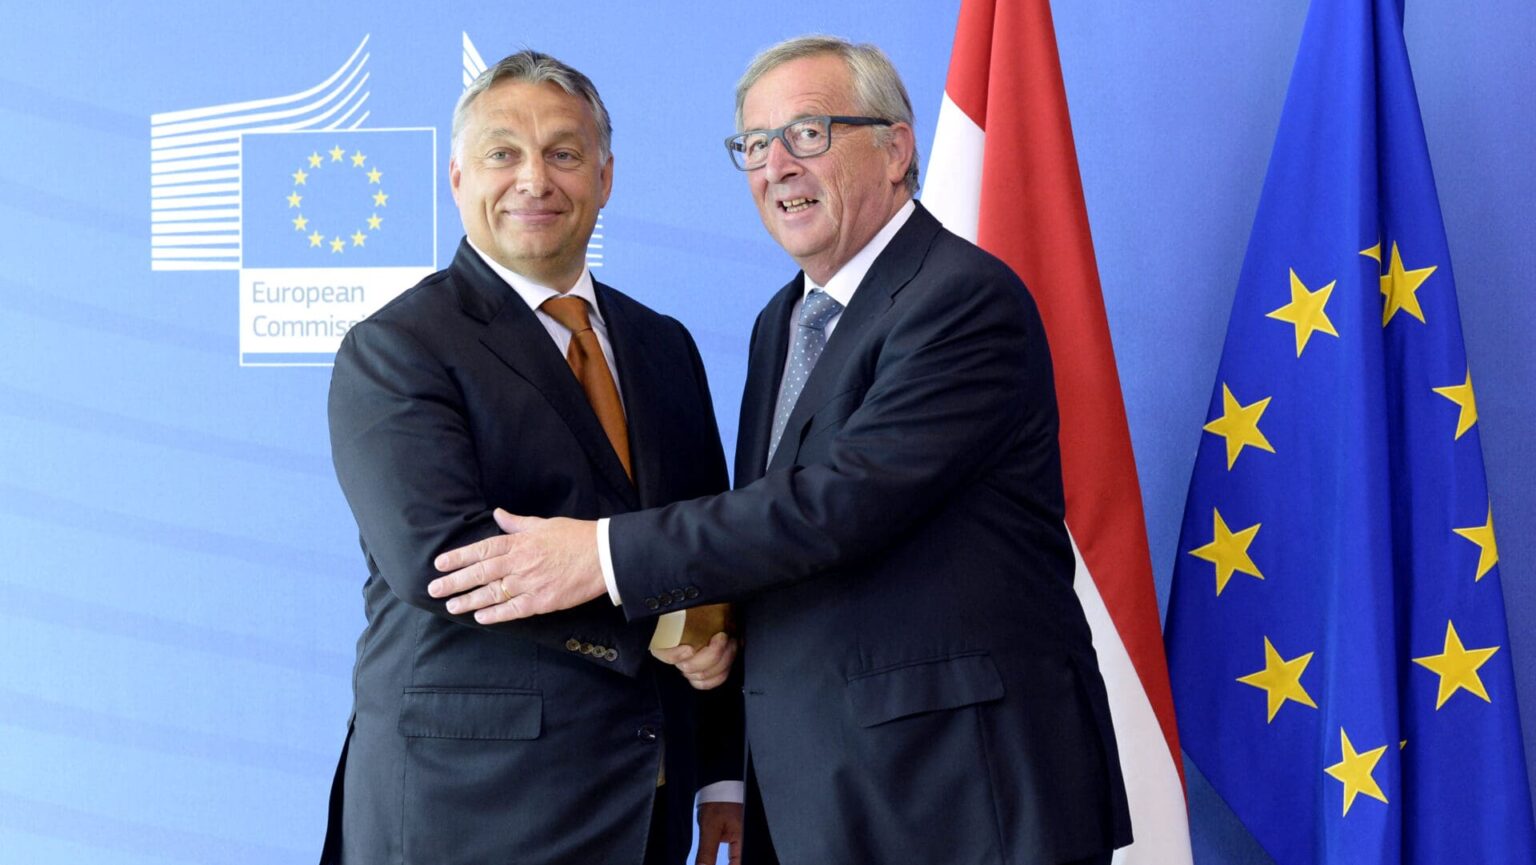 Former EC President Jean-Claude Juncker Bashes Donald Trump, Viktor Orbán in Interview